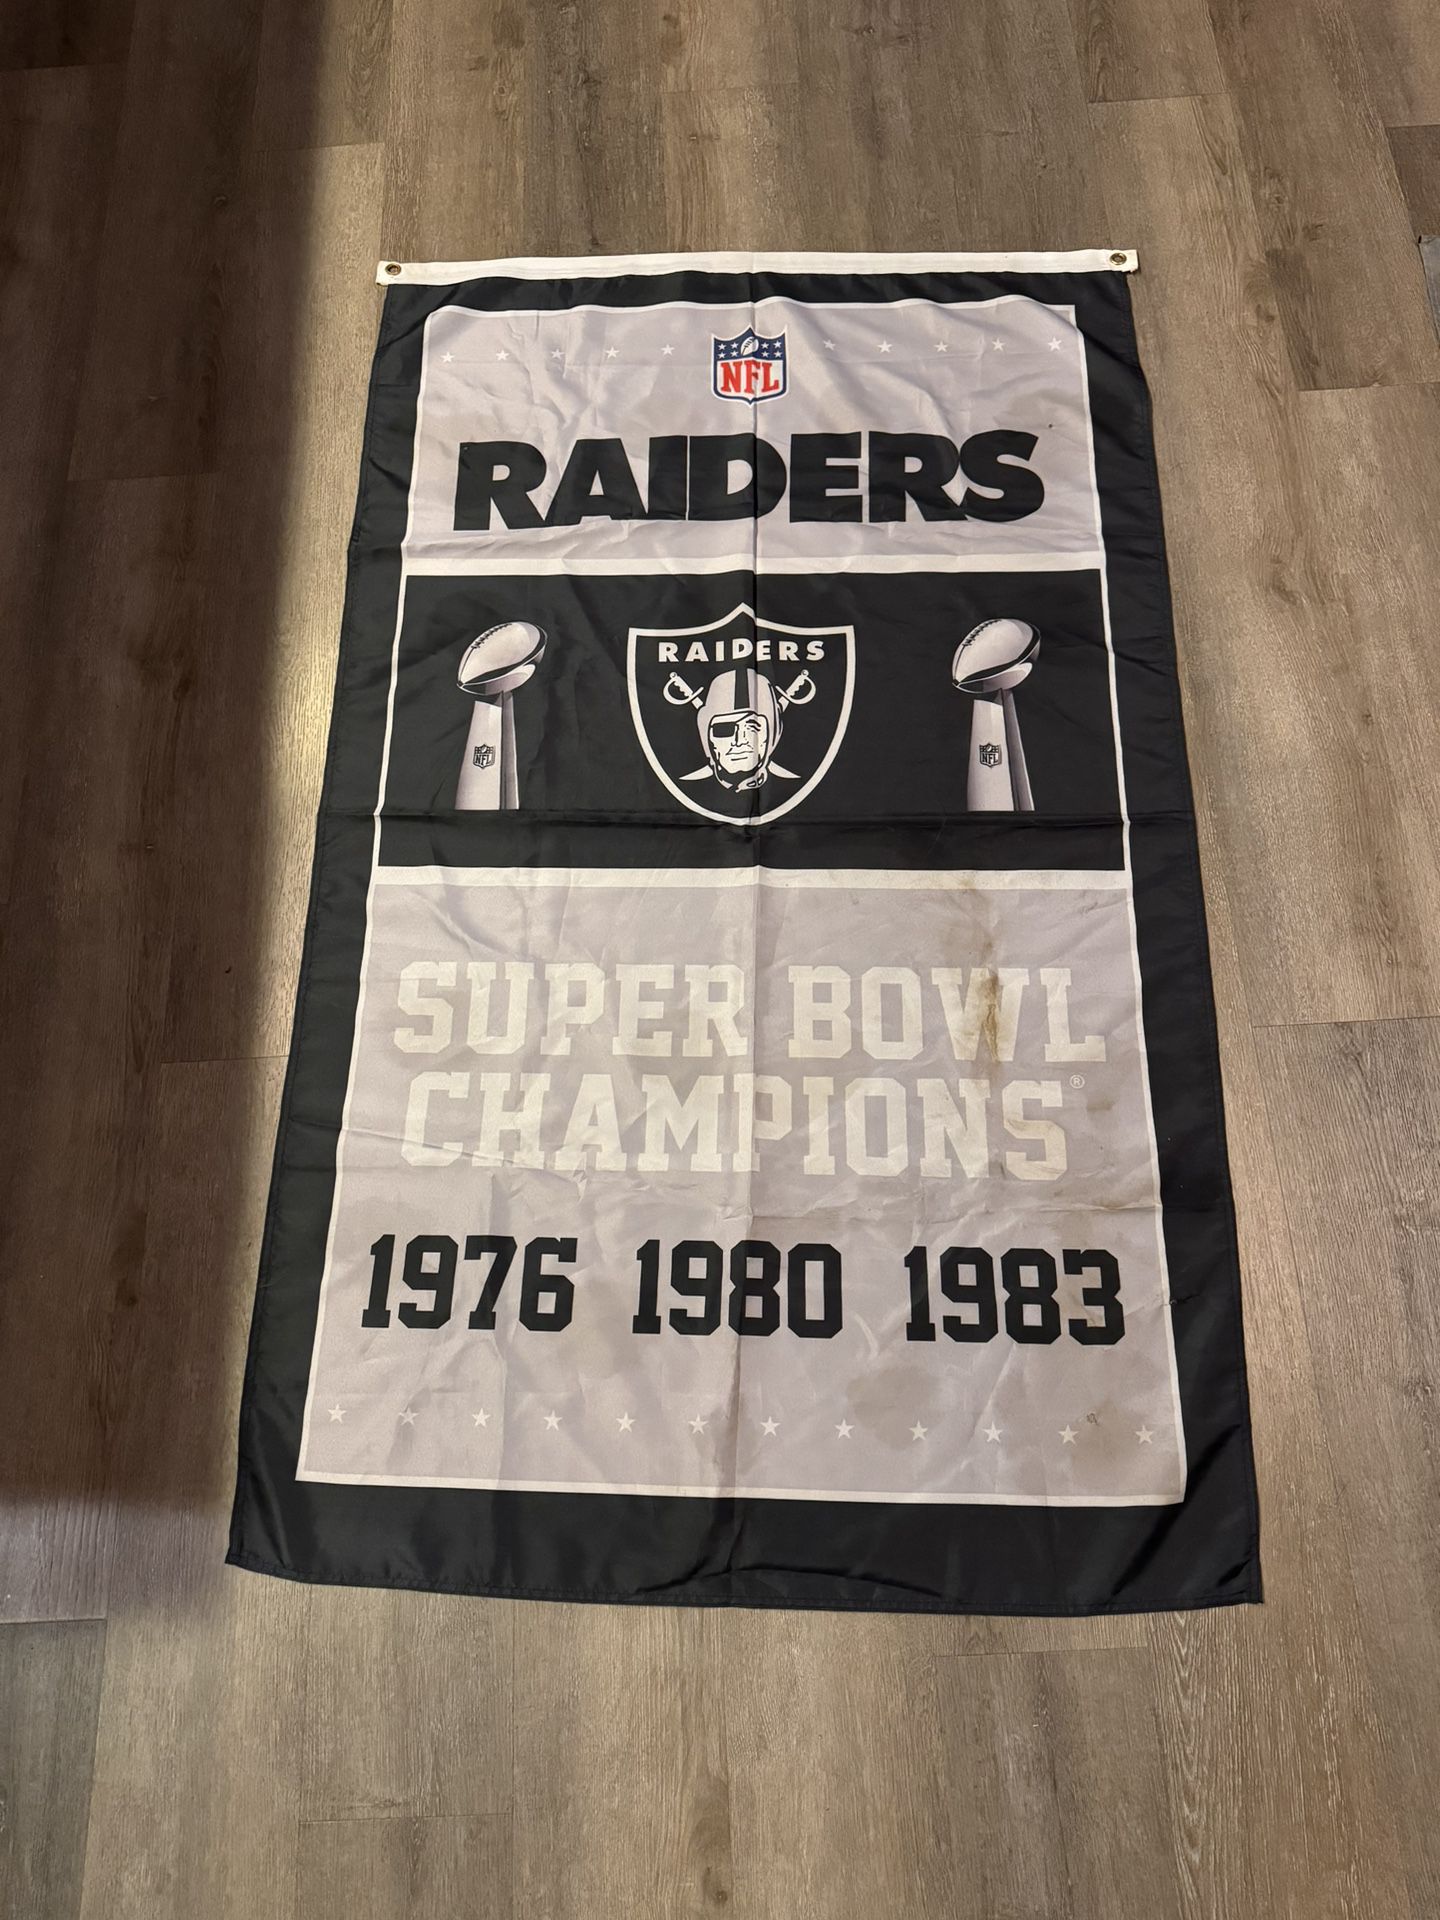 Raiders Banners